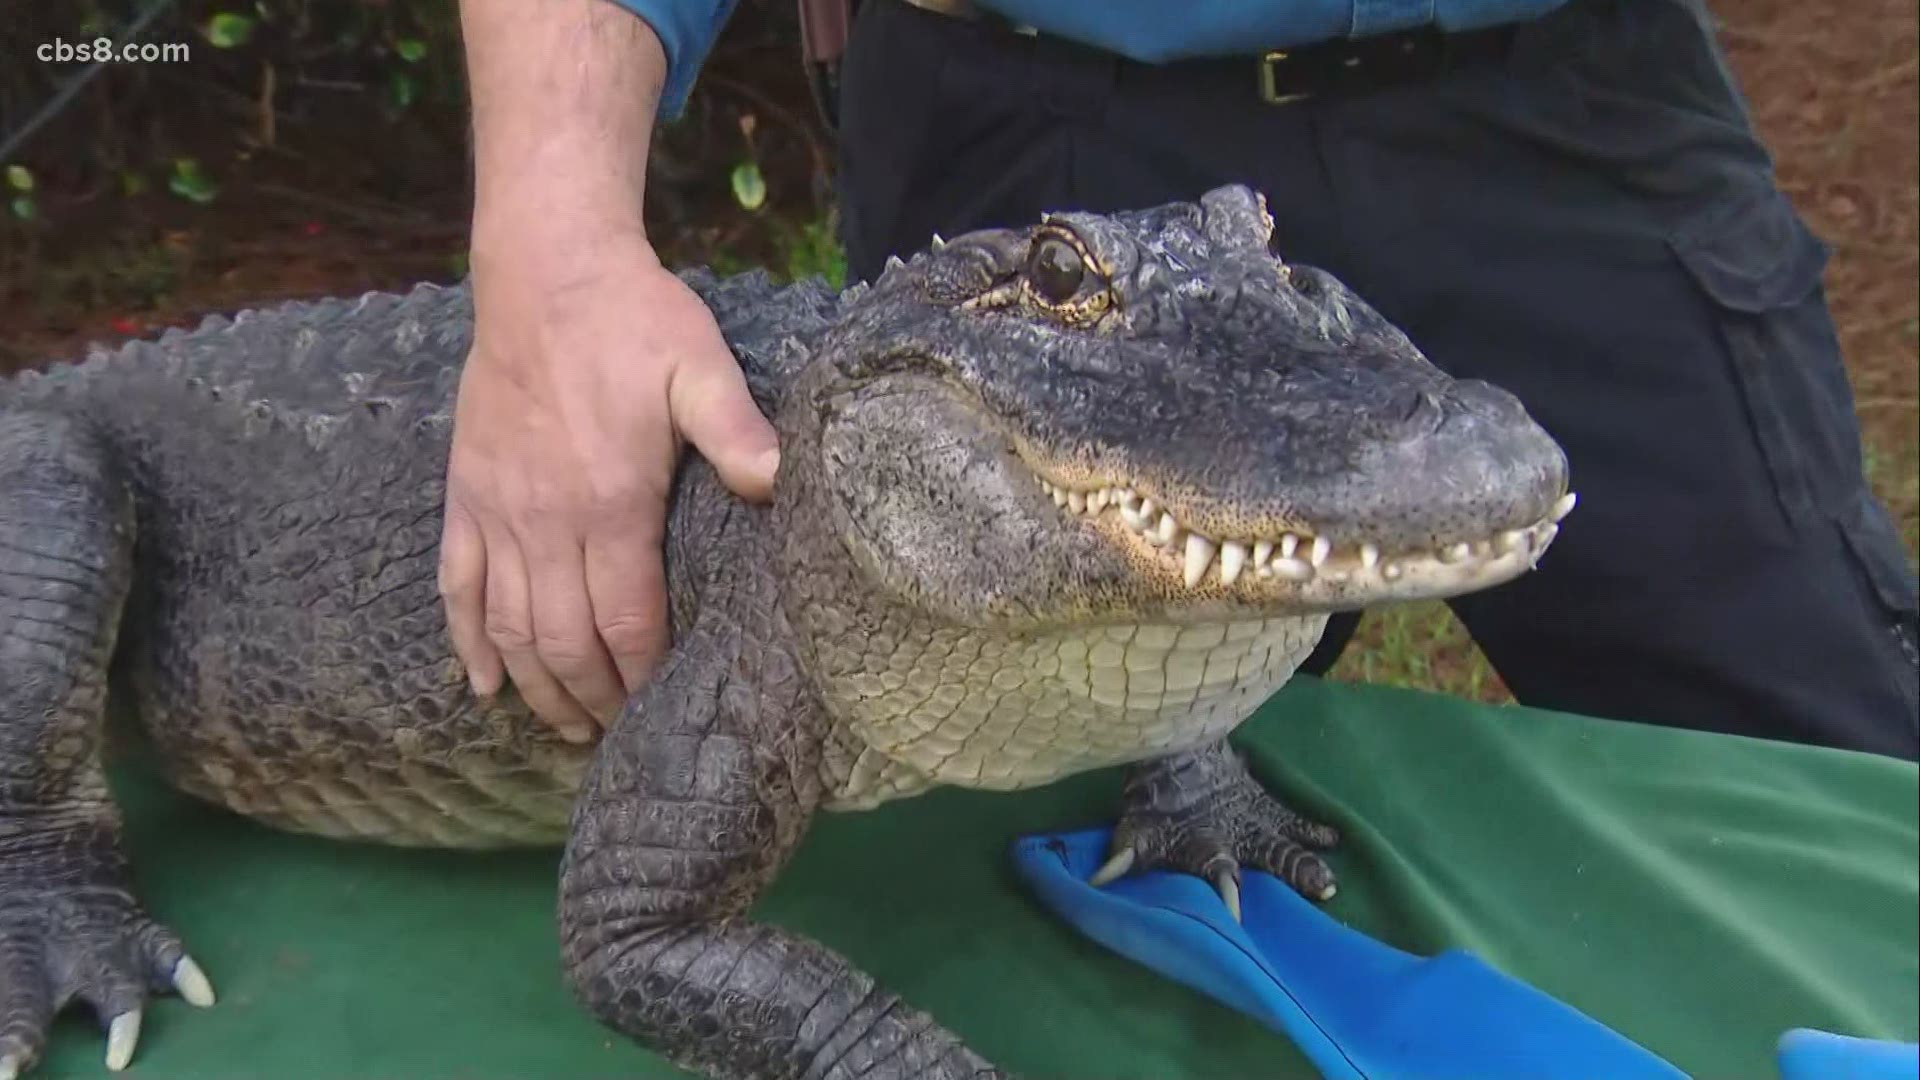 You can meet an alligator, like Spike!